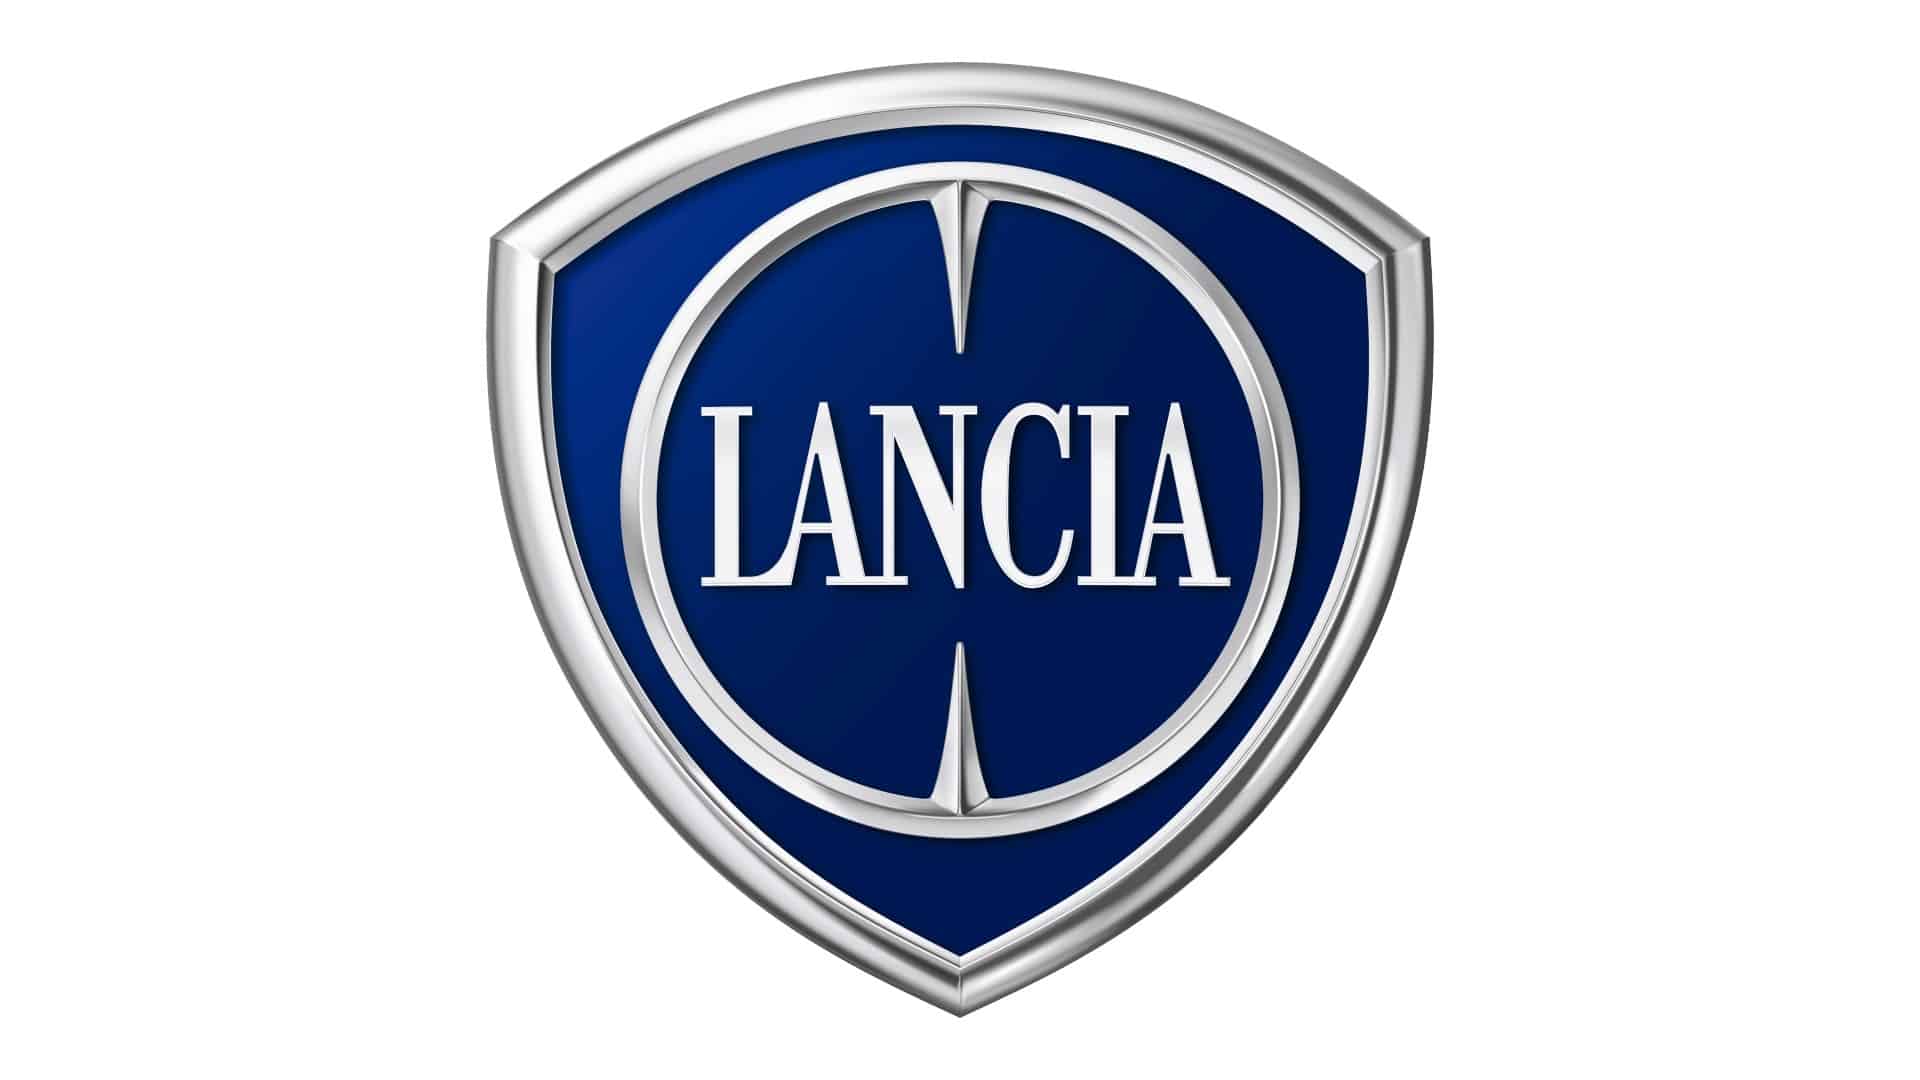 Lancia and its Post-Fiat Development